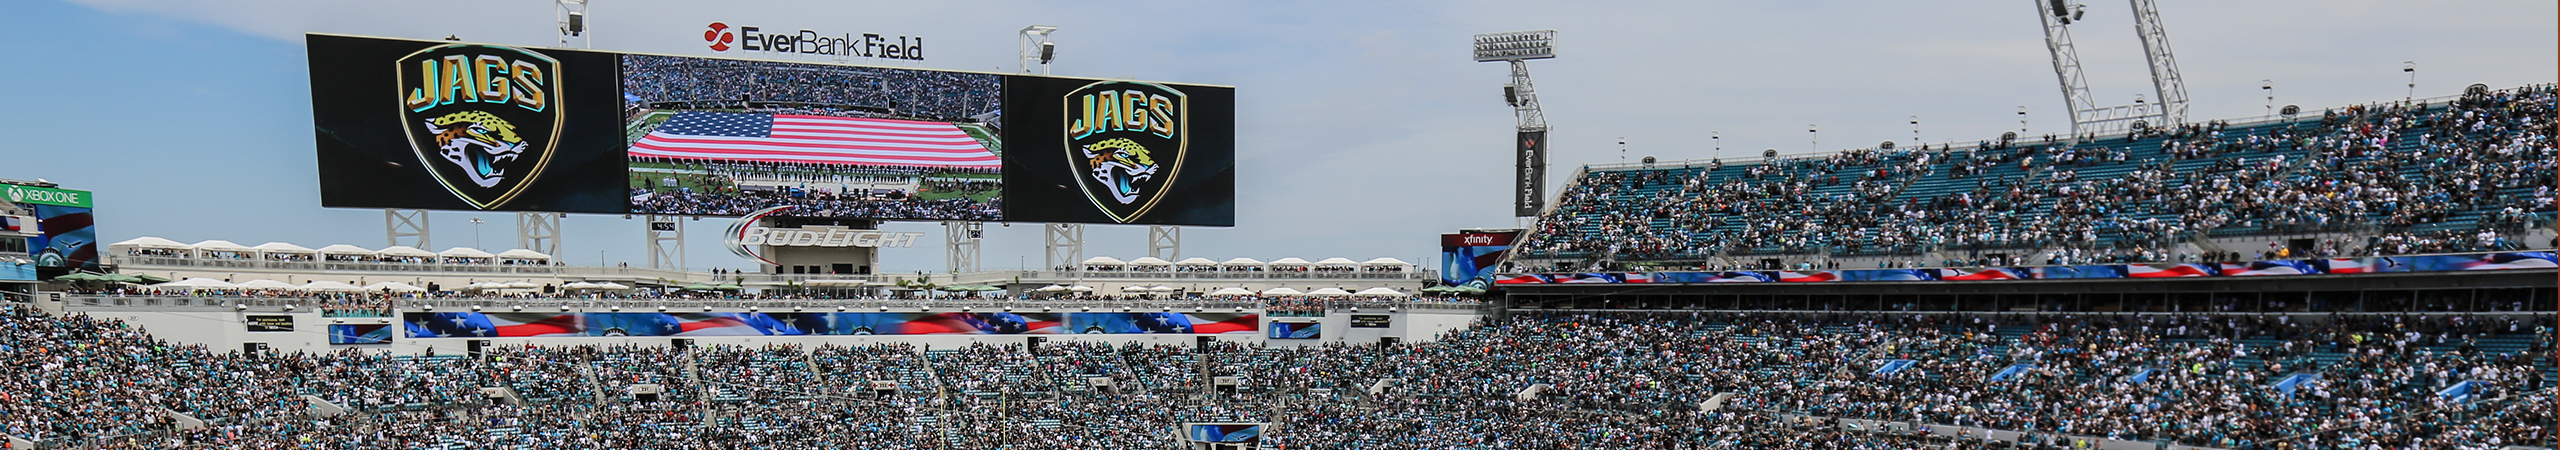 Jaguars vs Panthers 2015